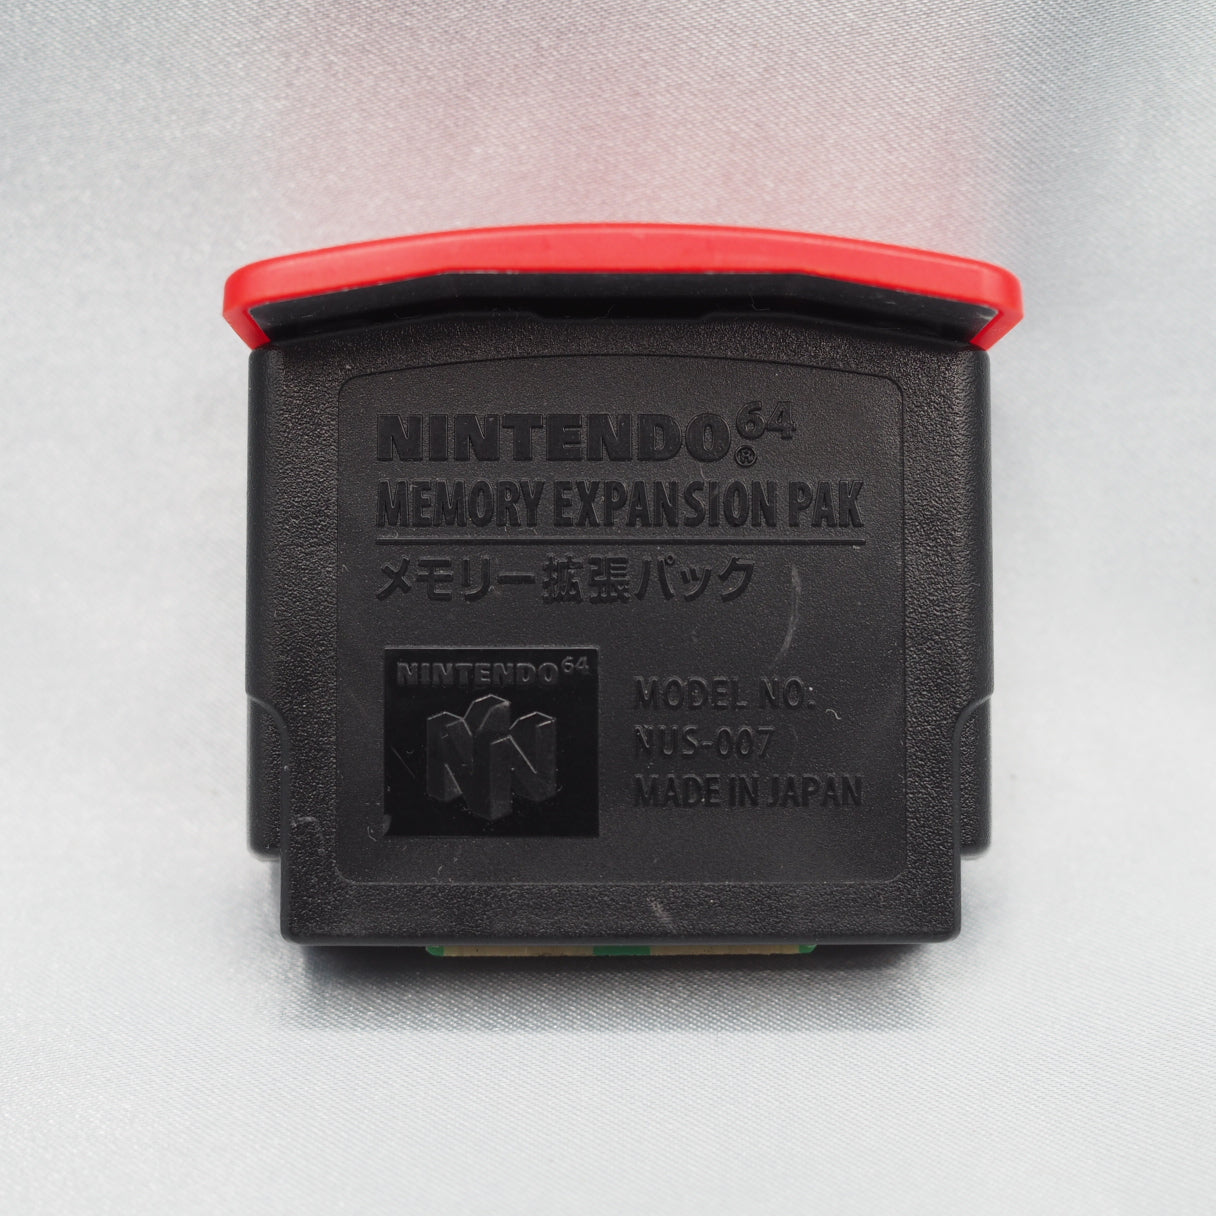 Nintendo 64 MEMORY EXPANSION PAK NUS-007